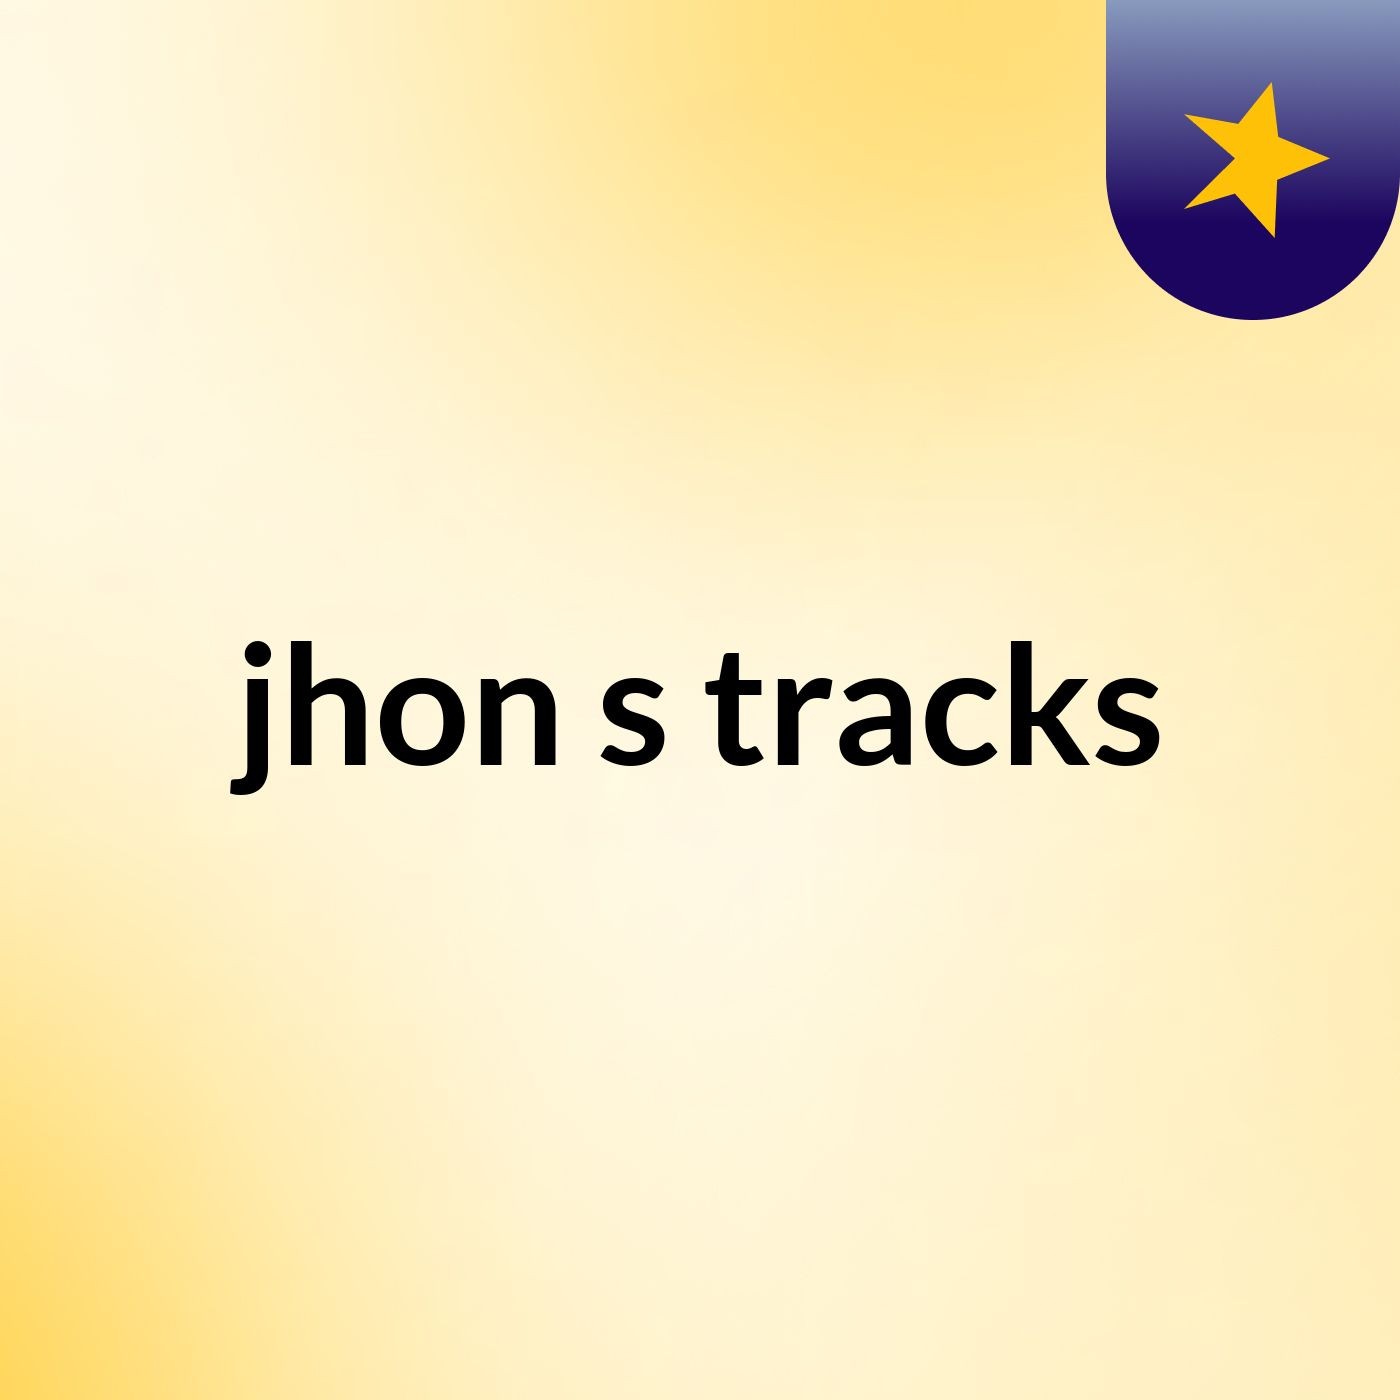 jhon's tracks